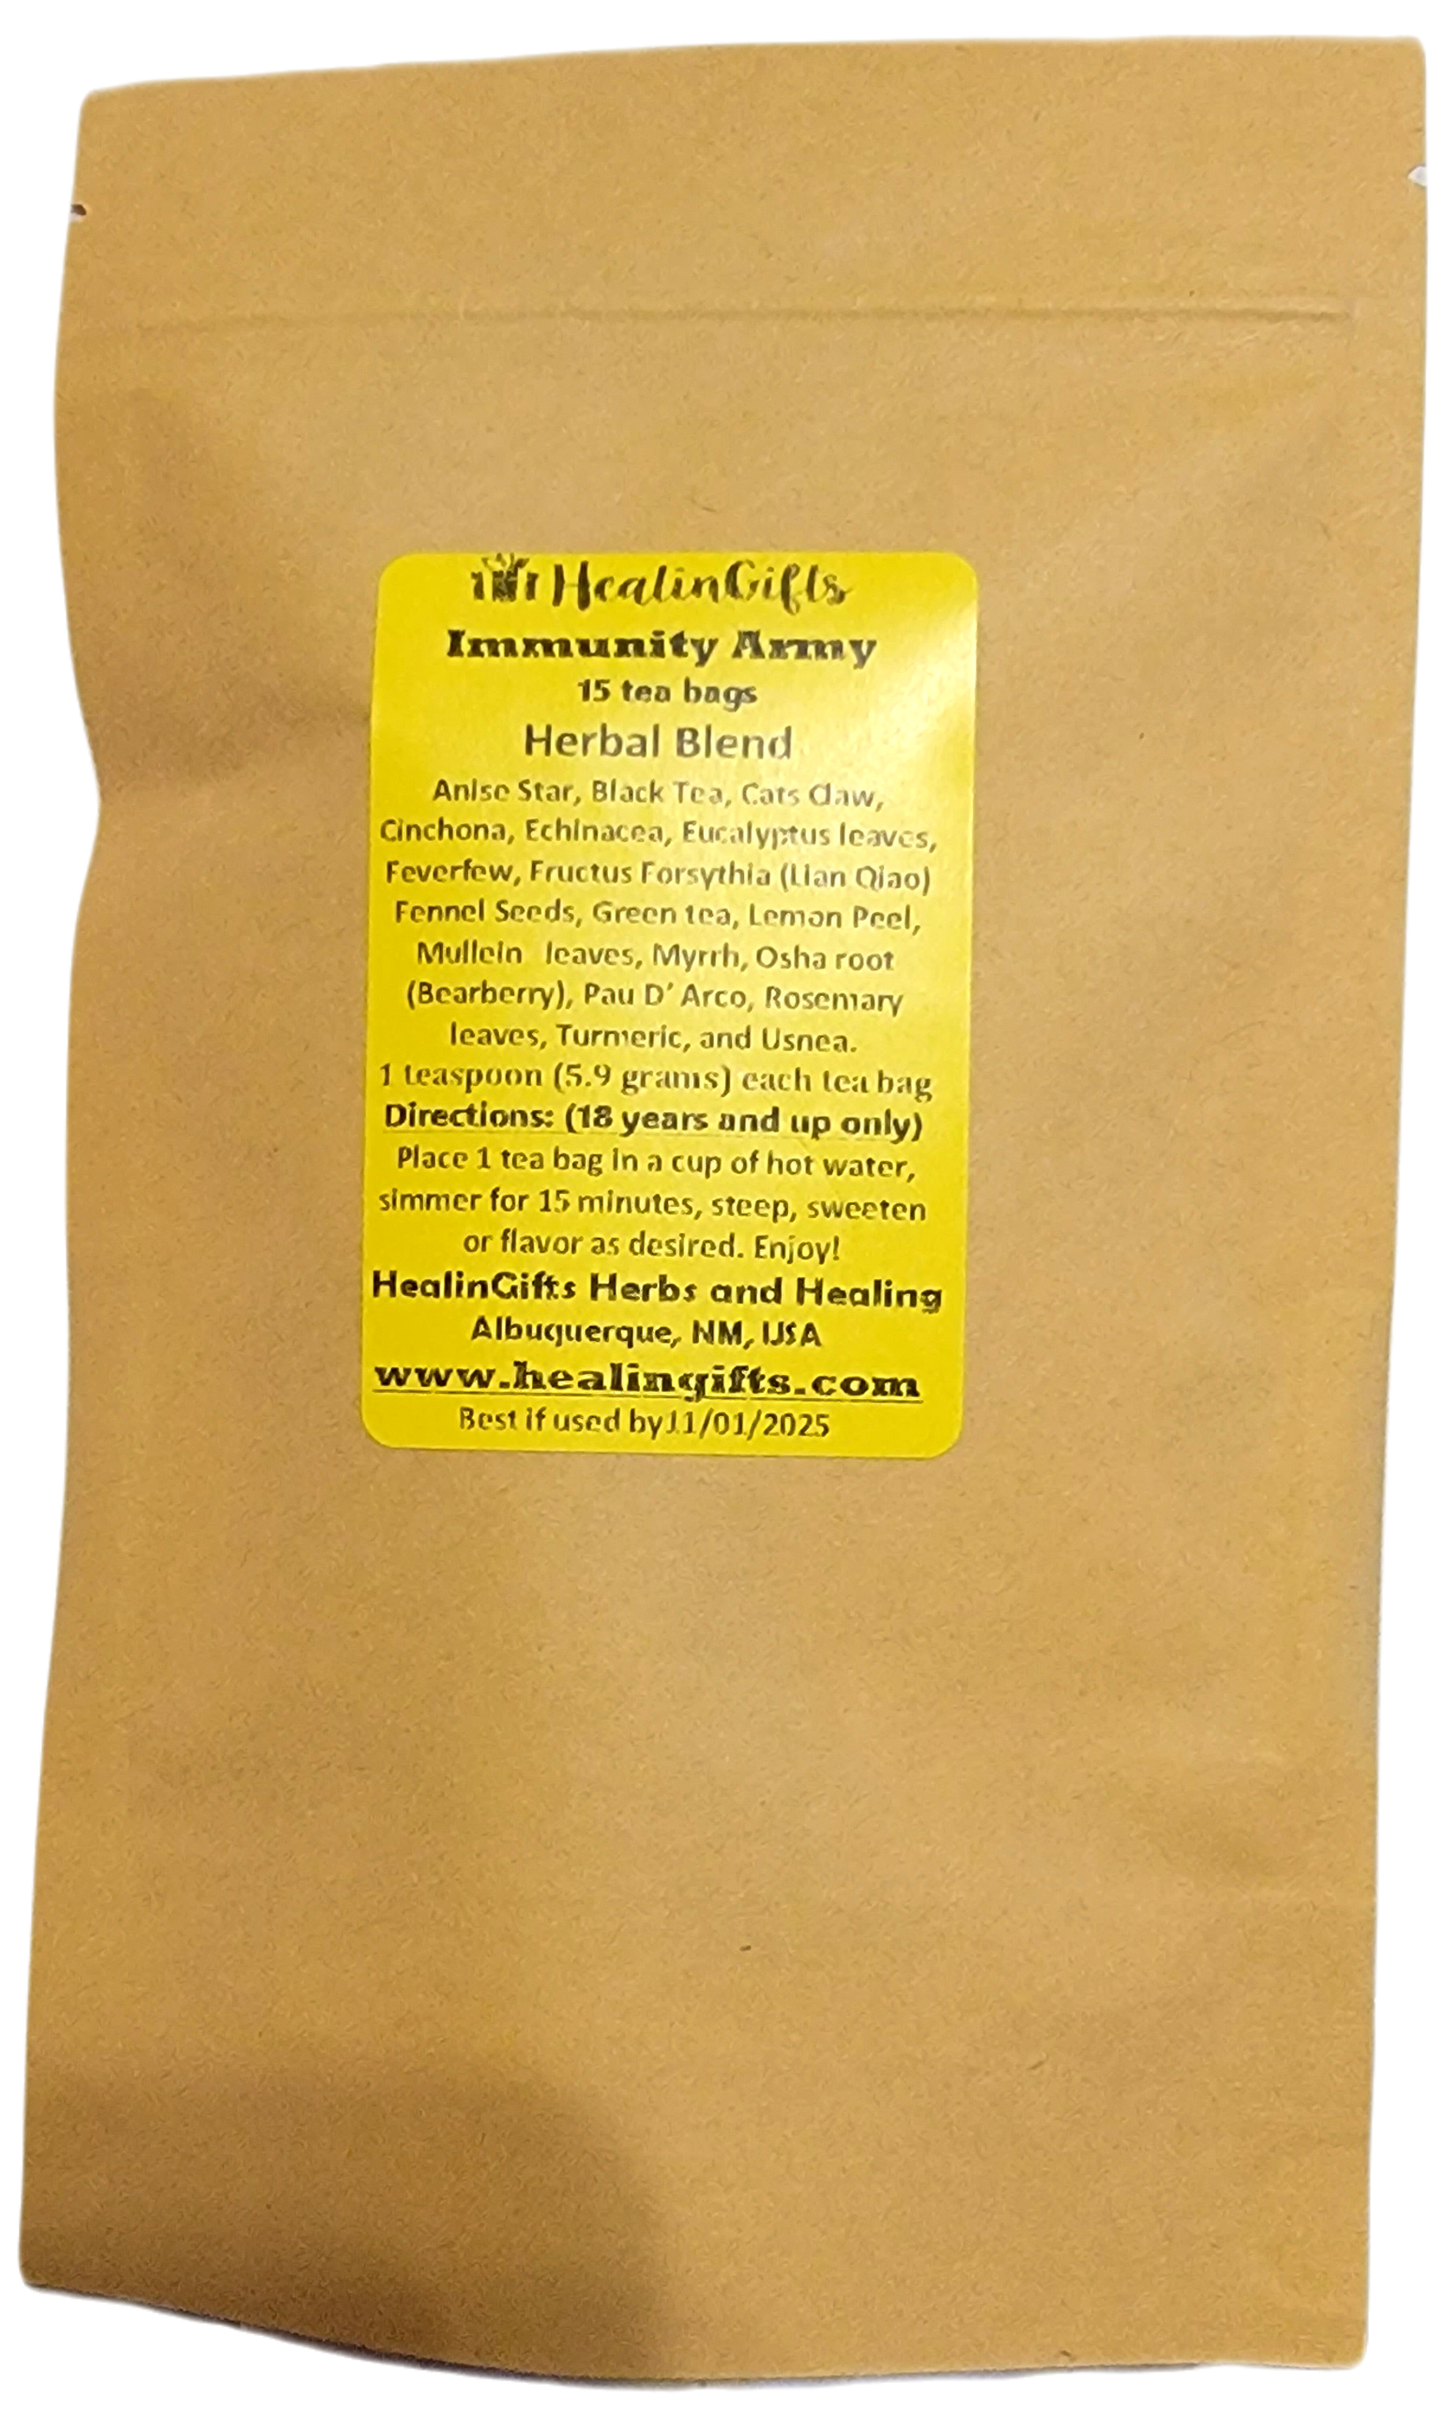 Immunity Army Herbal blend 15 teabags